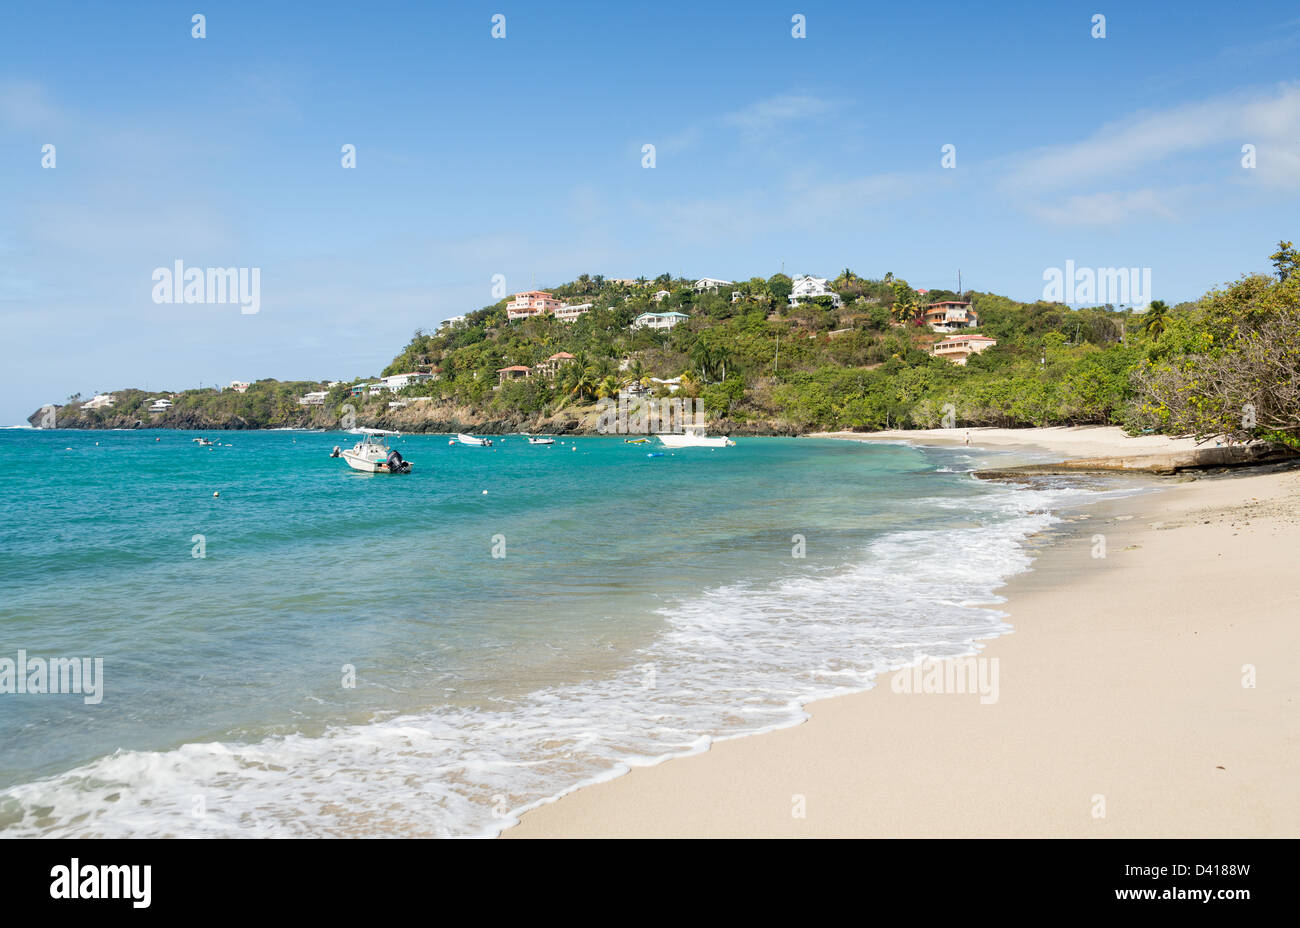 Hull Bay beach scene on island of St Thomas in US Virgin Islands USVI Stock Photo